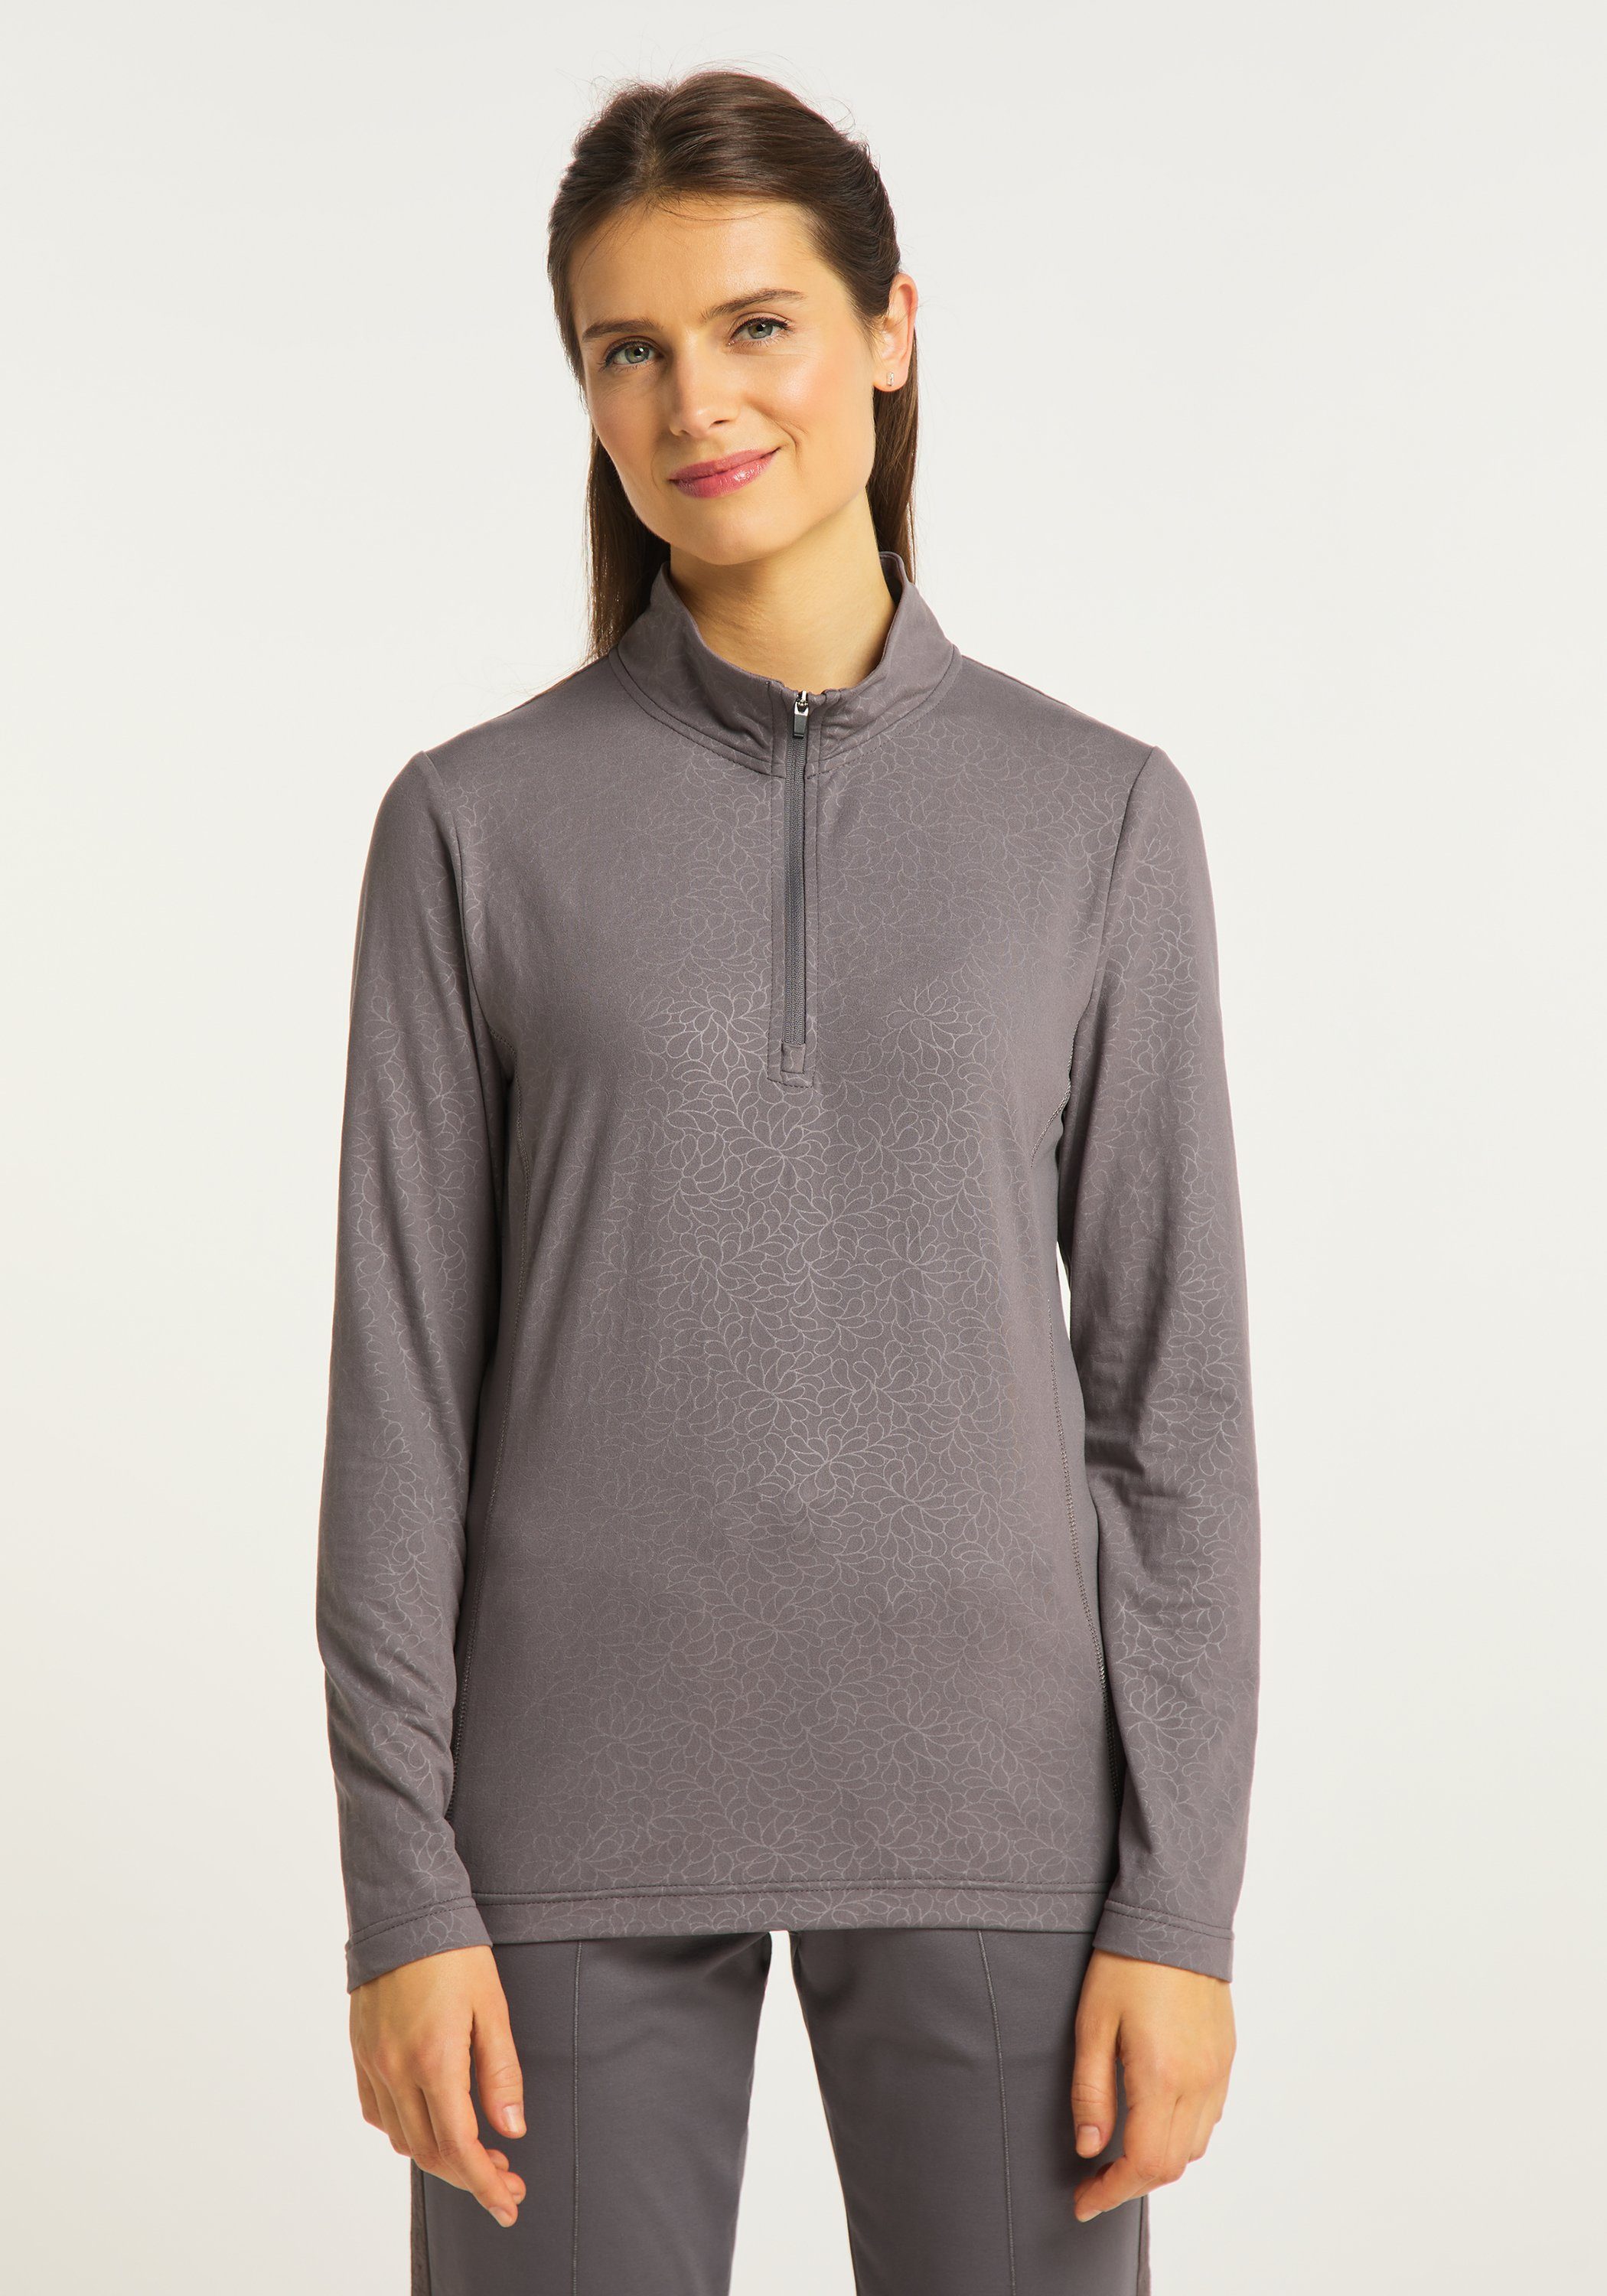 Joy FRANCA soft taupe Sweatshirt Zip-Shirt Sportswear